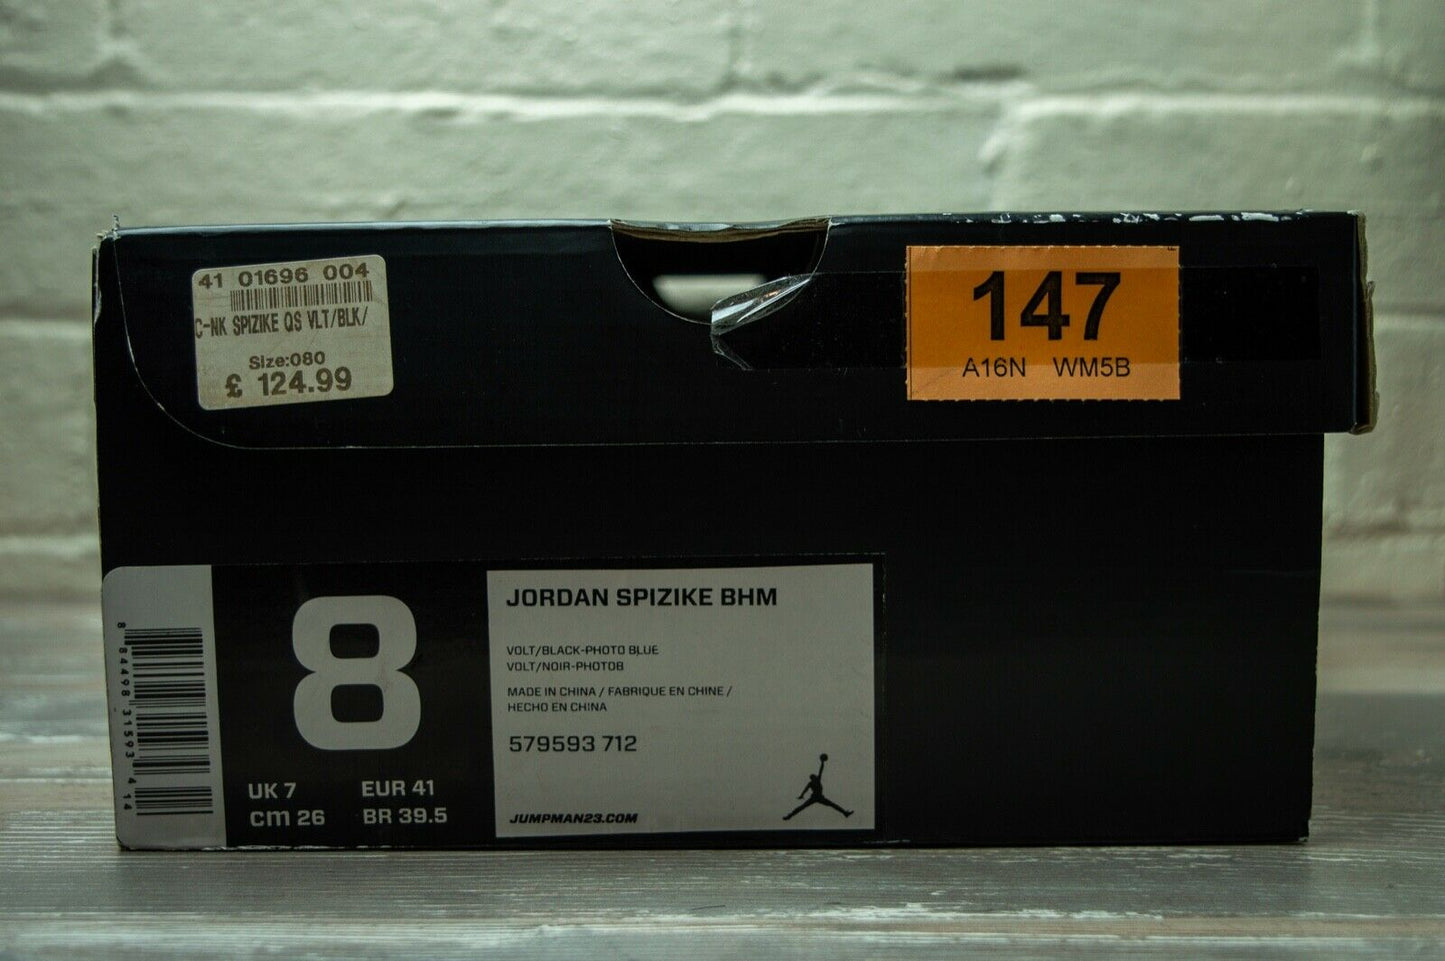 Nike Air Jordan Spizike BHM 579593 712 -Nike Air Jordan Spizike BHM 579593 712 -